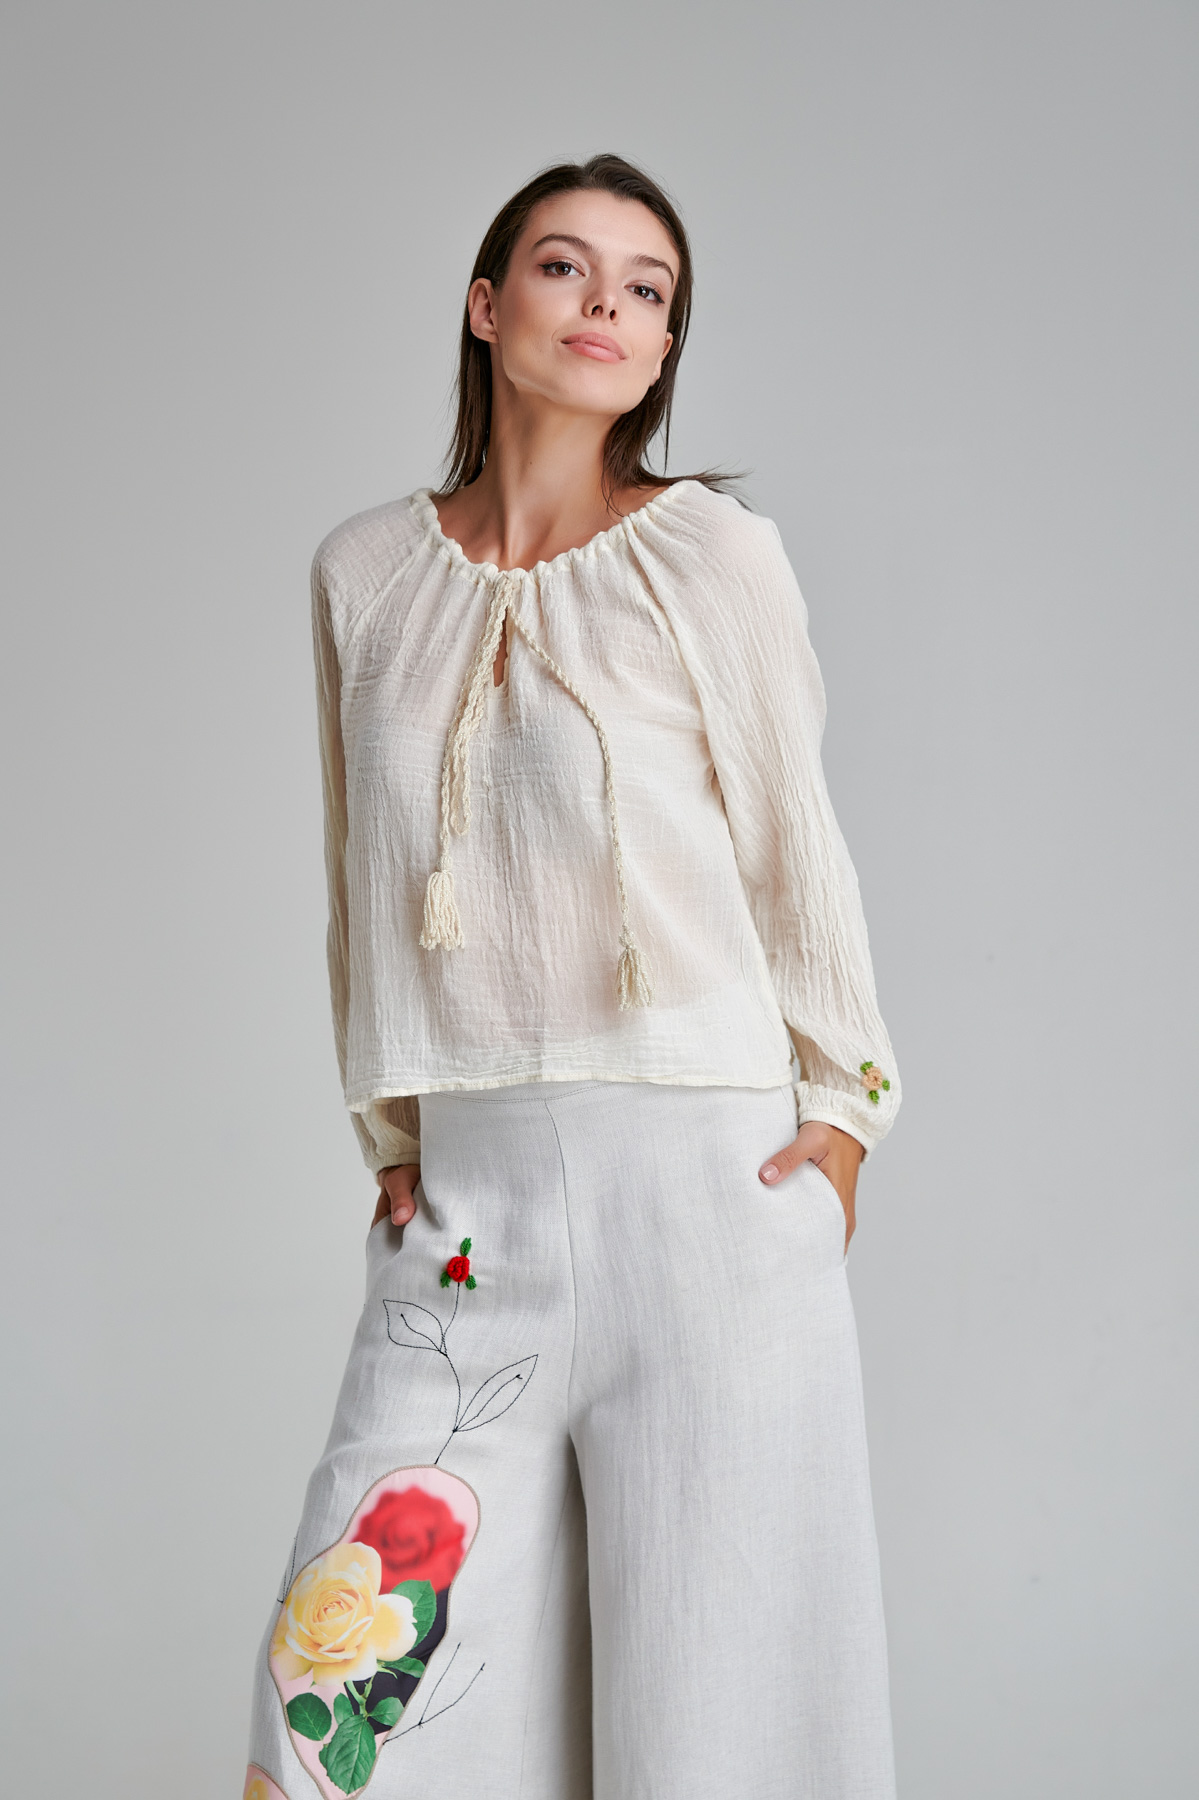 ROSE blouse made of natural linen fabric. Natural fabrics, original design, handmade embroidery